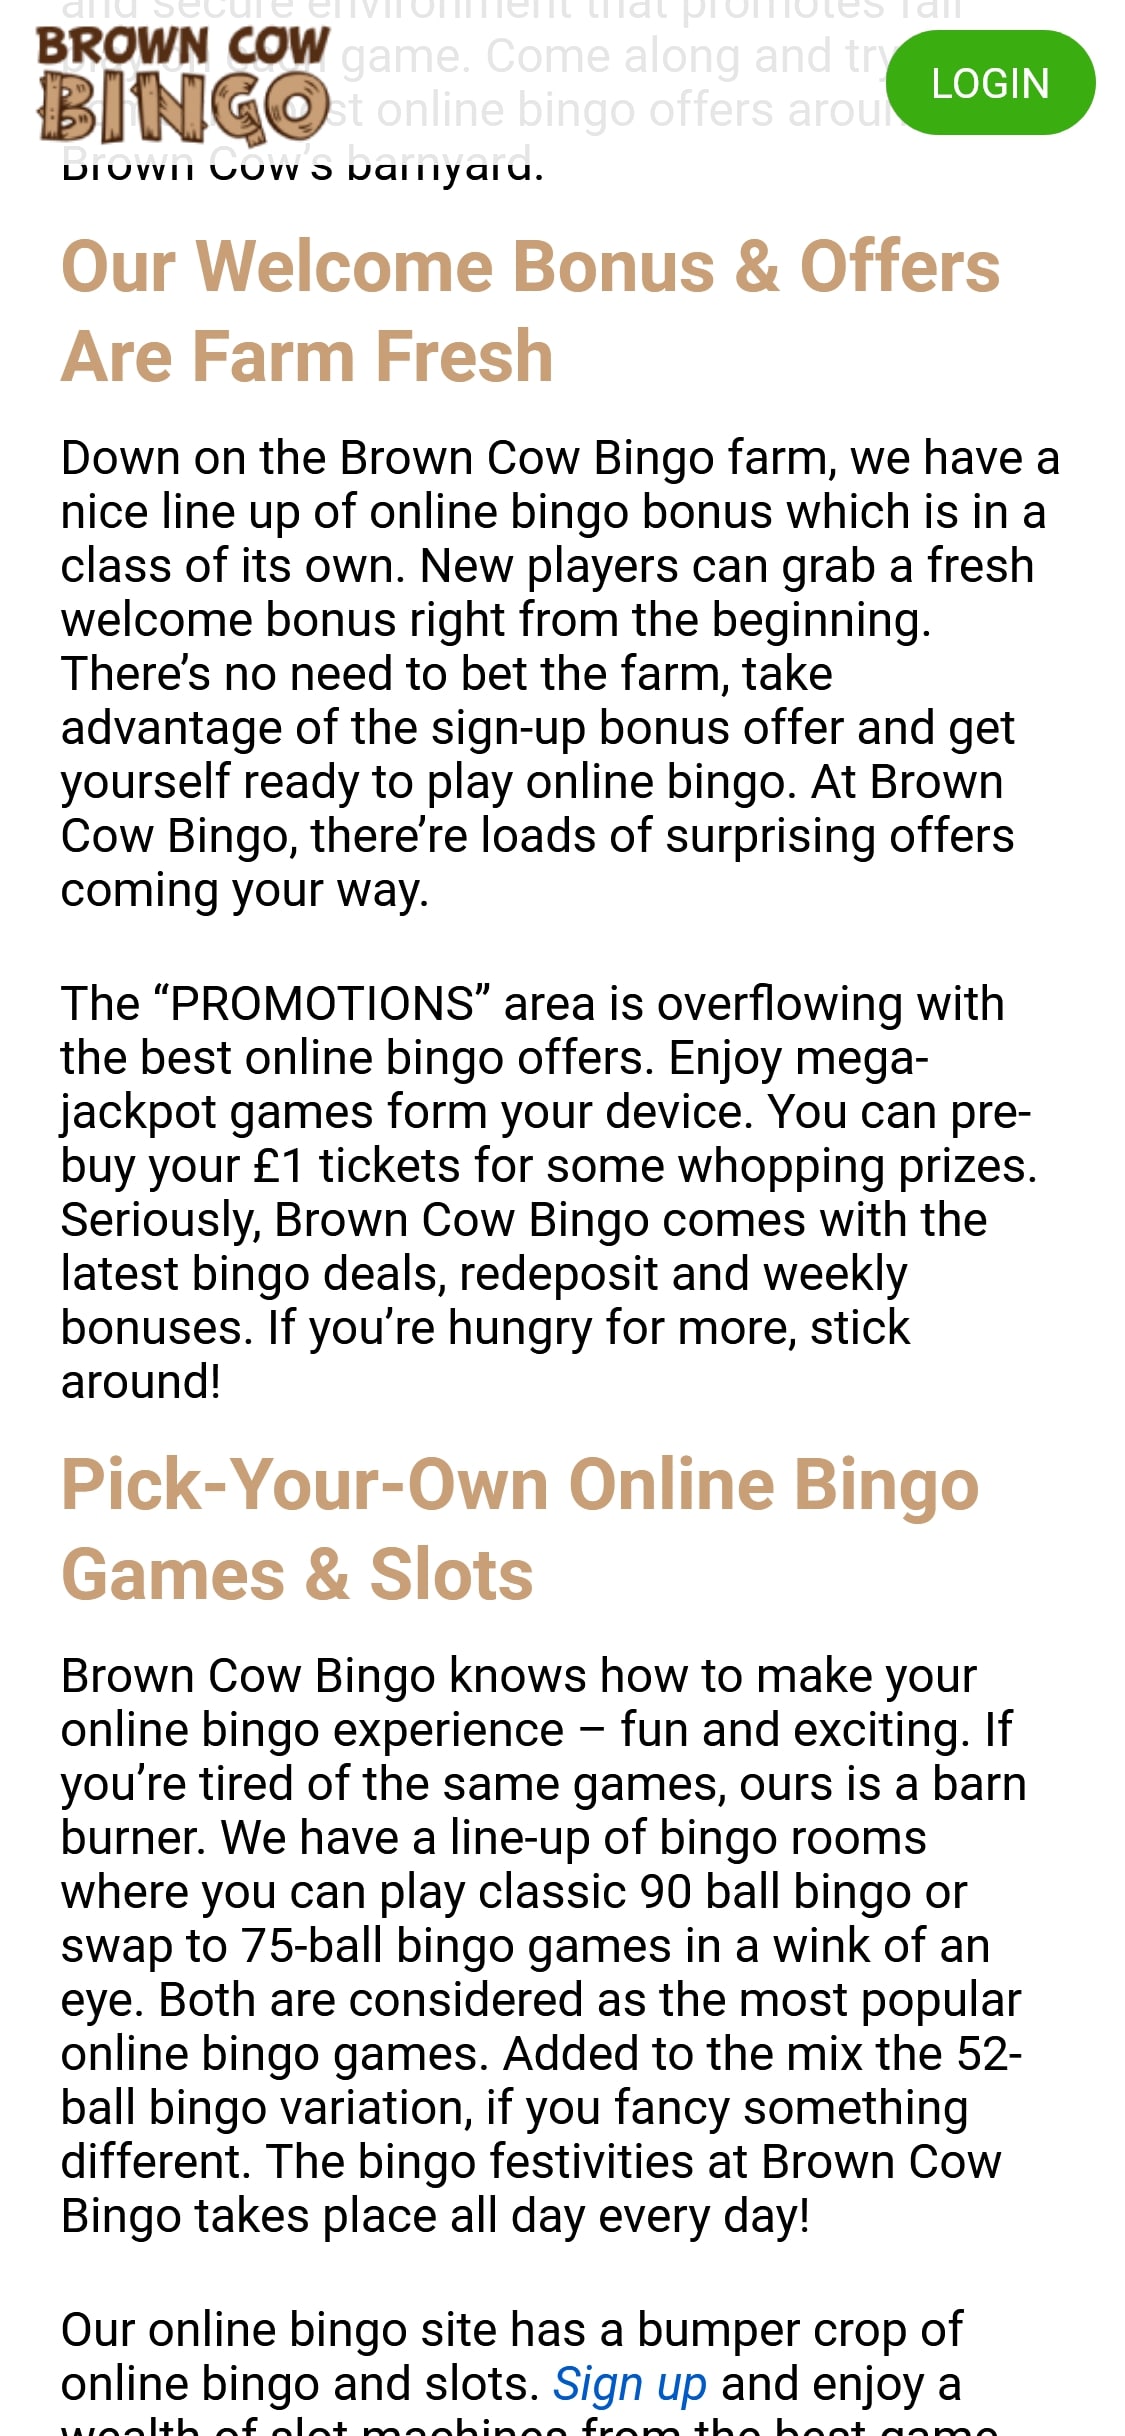 Brown Cow Bingo Casino Mobile No Deposit Bonus Review